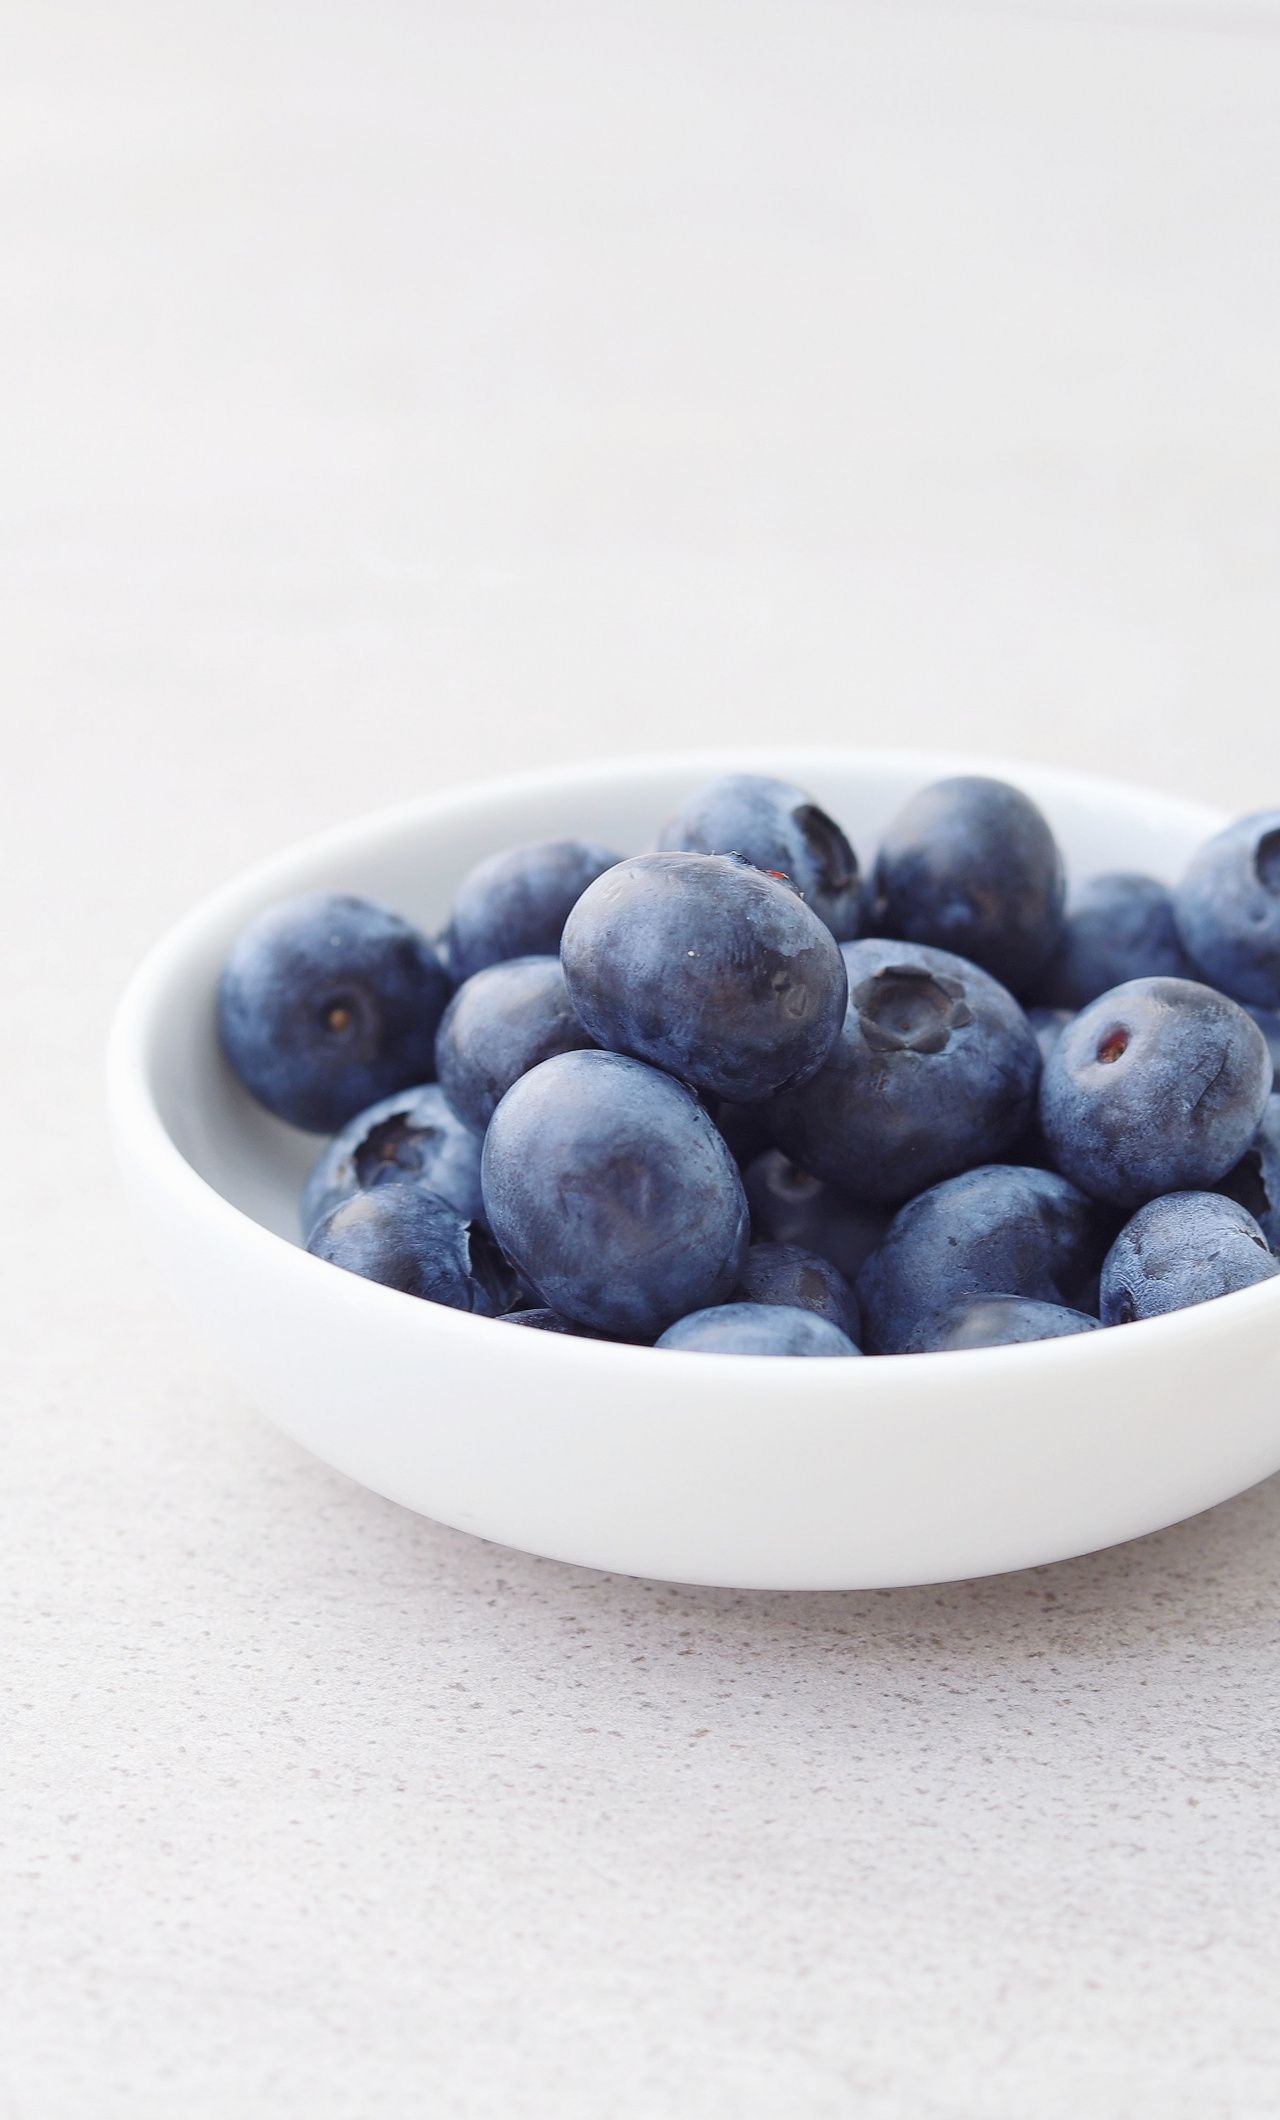 Huckleberry: European bilberry, Edible fruit. 1280x2120 HD Wallpaper.